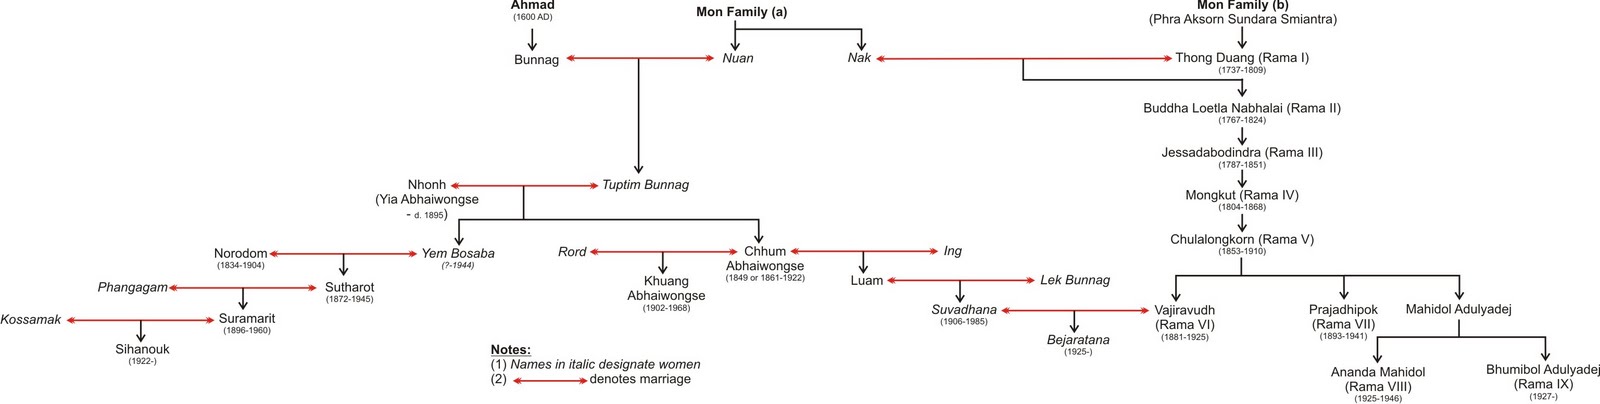 barack obama family tree diagram. blank family tree diagram.